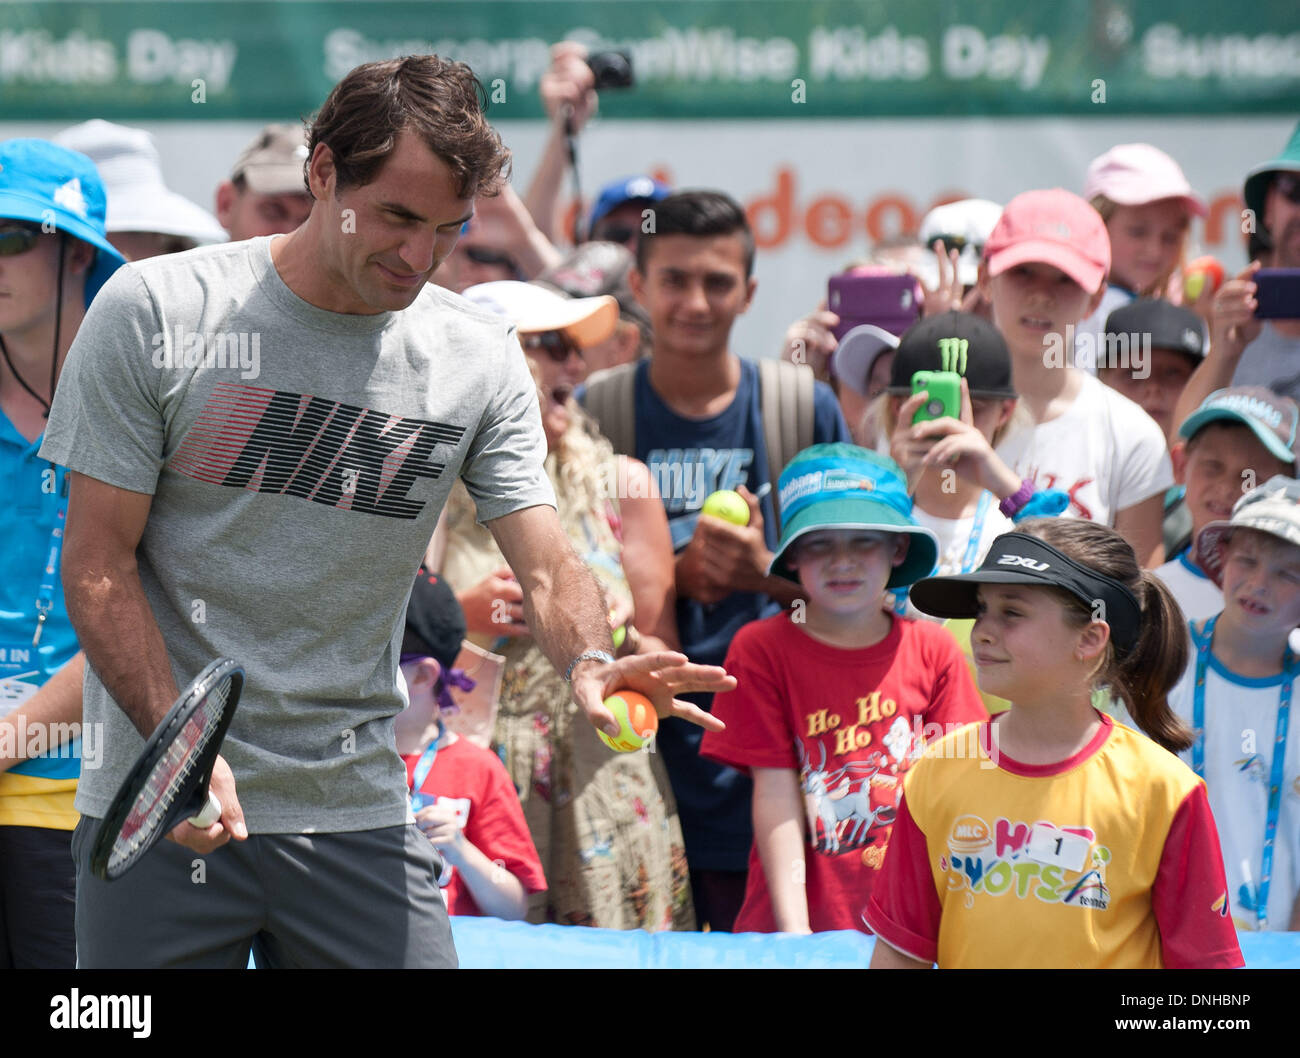 Brisbane, Australia. 30th Dec, 2013. Roger Federer of Switzerland plays with kids during 'Kids day' event at Brisbane International tennis tournament in Brisbane, Australia, Dec. 30, 2013. Credit:  Bai Xue/Xinhua/Alamy Live News Stock Photo